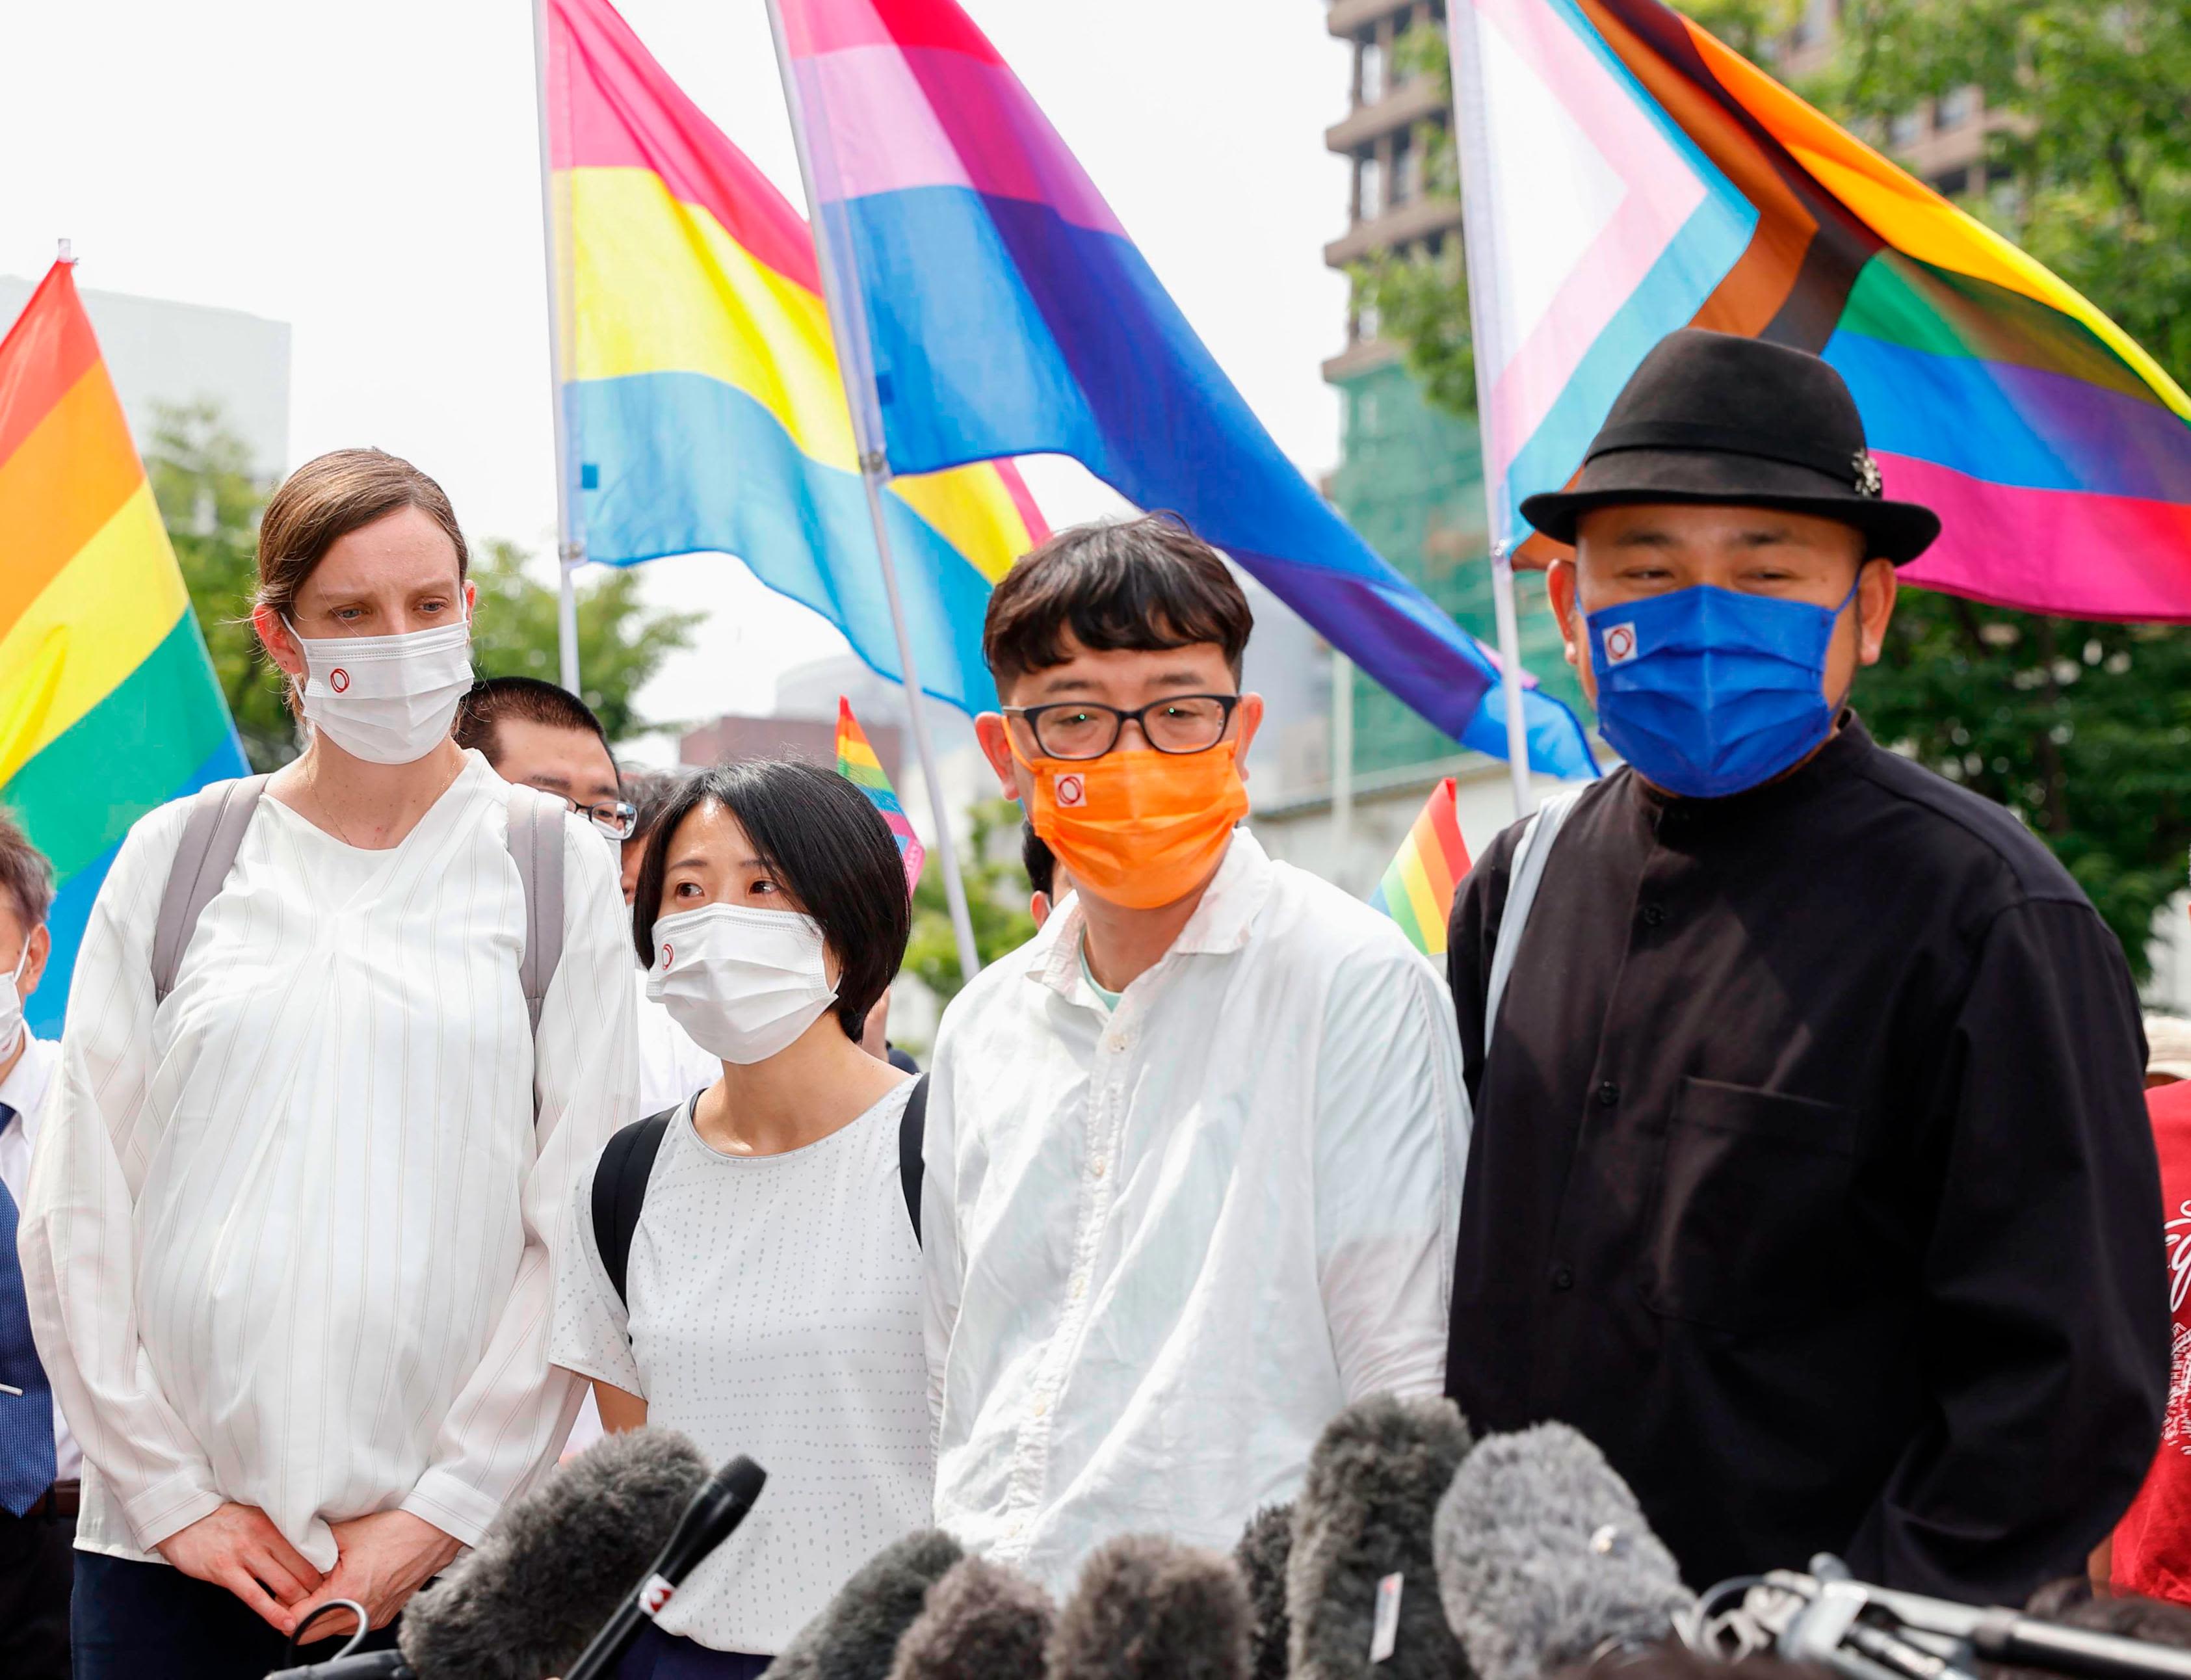 Hd Xnxxxnxxx - Japanese court upholds ban on same-sex marriage | CNN